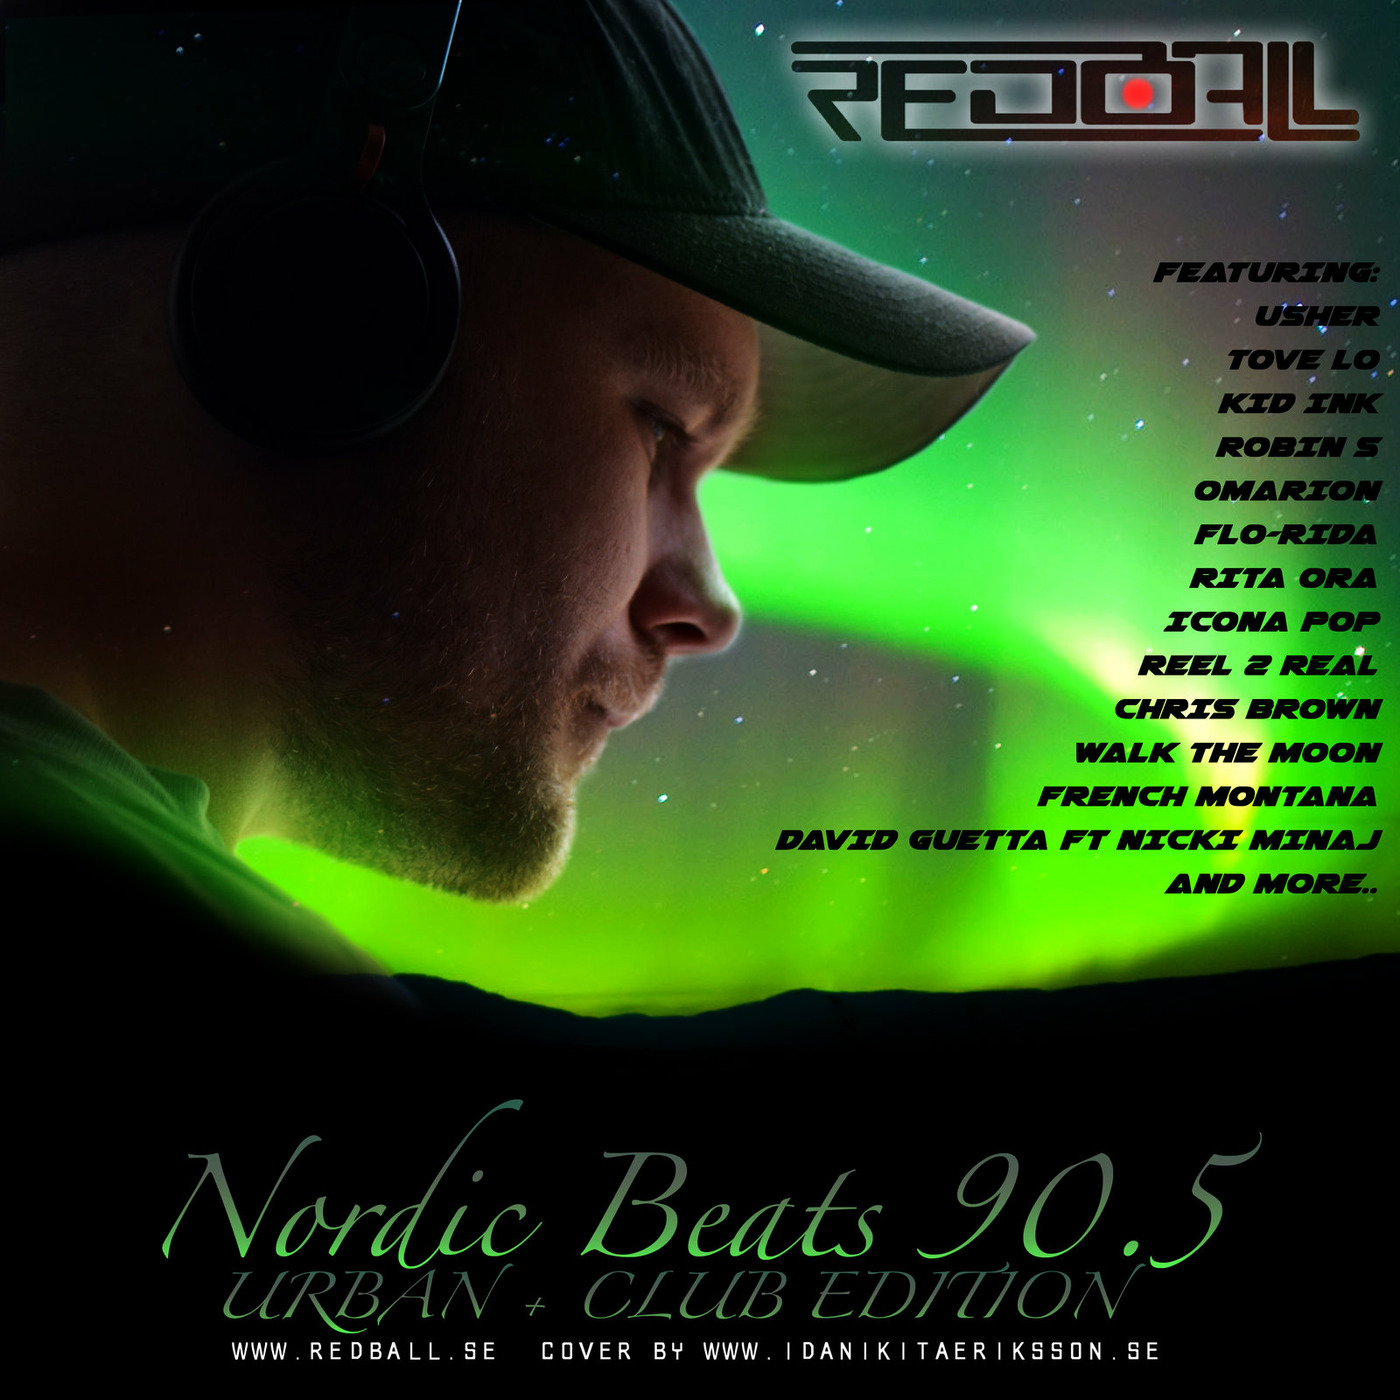 Nordic Beats 90.5 - Urban + Club Edition by redball